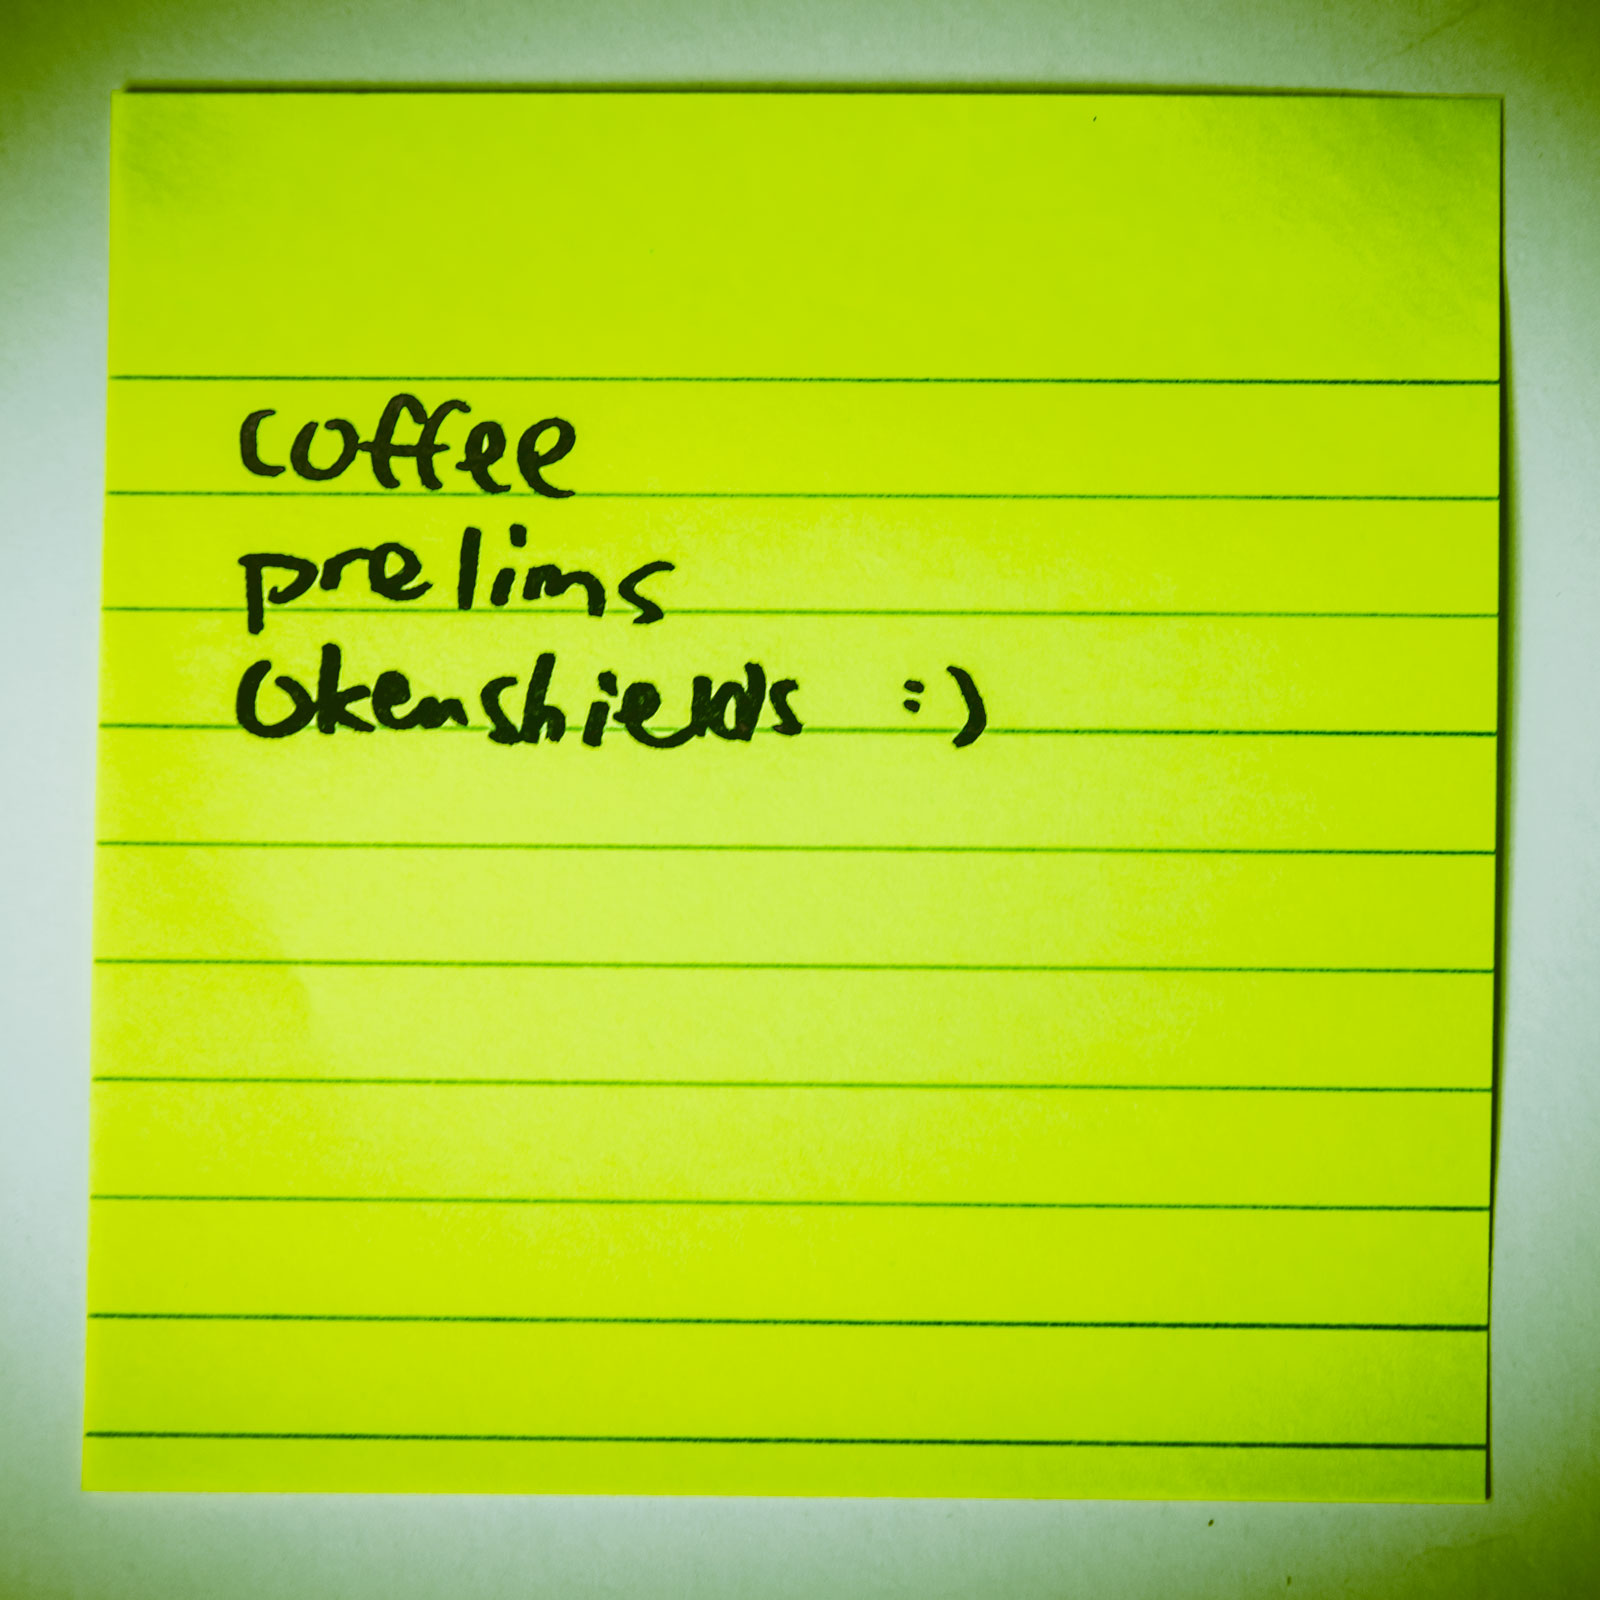 Coffee prelims Okenshields